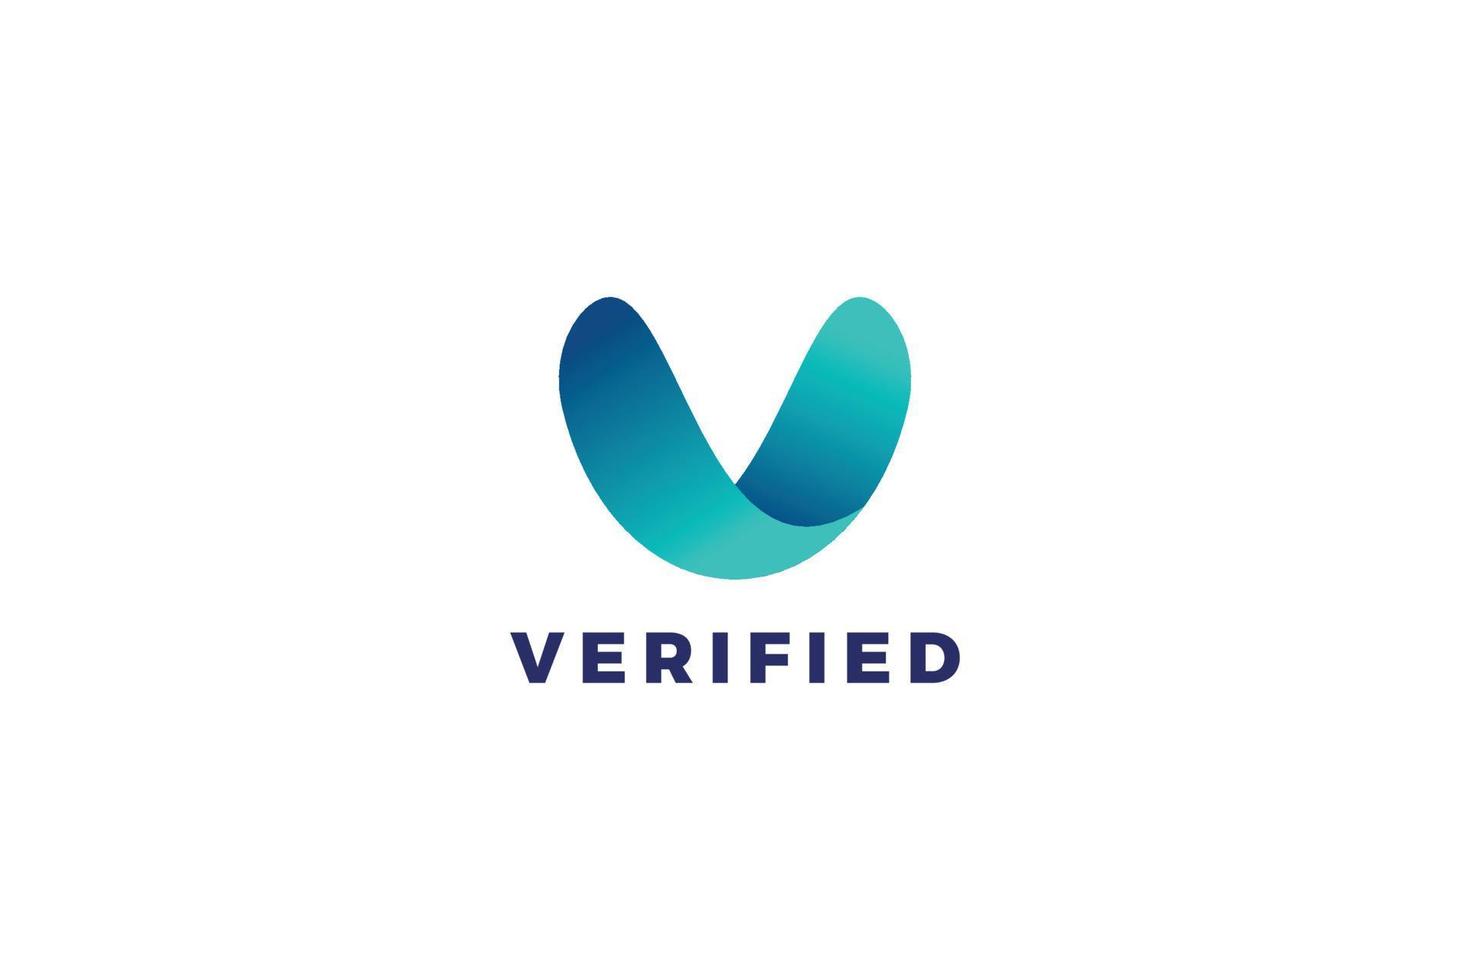 buchstabe v blaue farbe 3d verifiziertes technologisches logo vektor